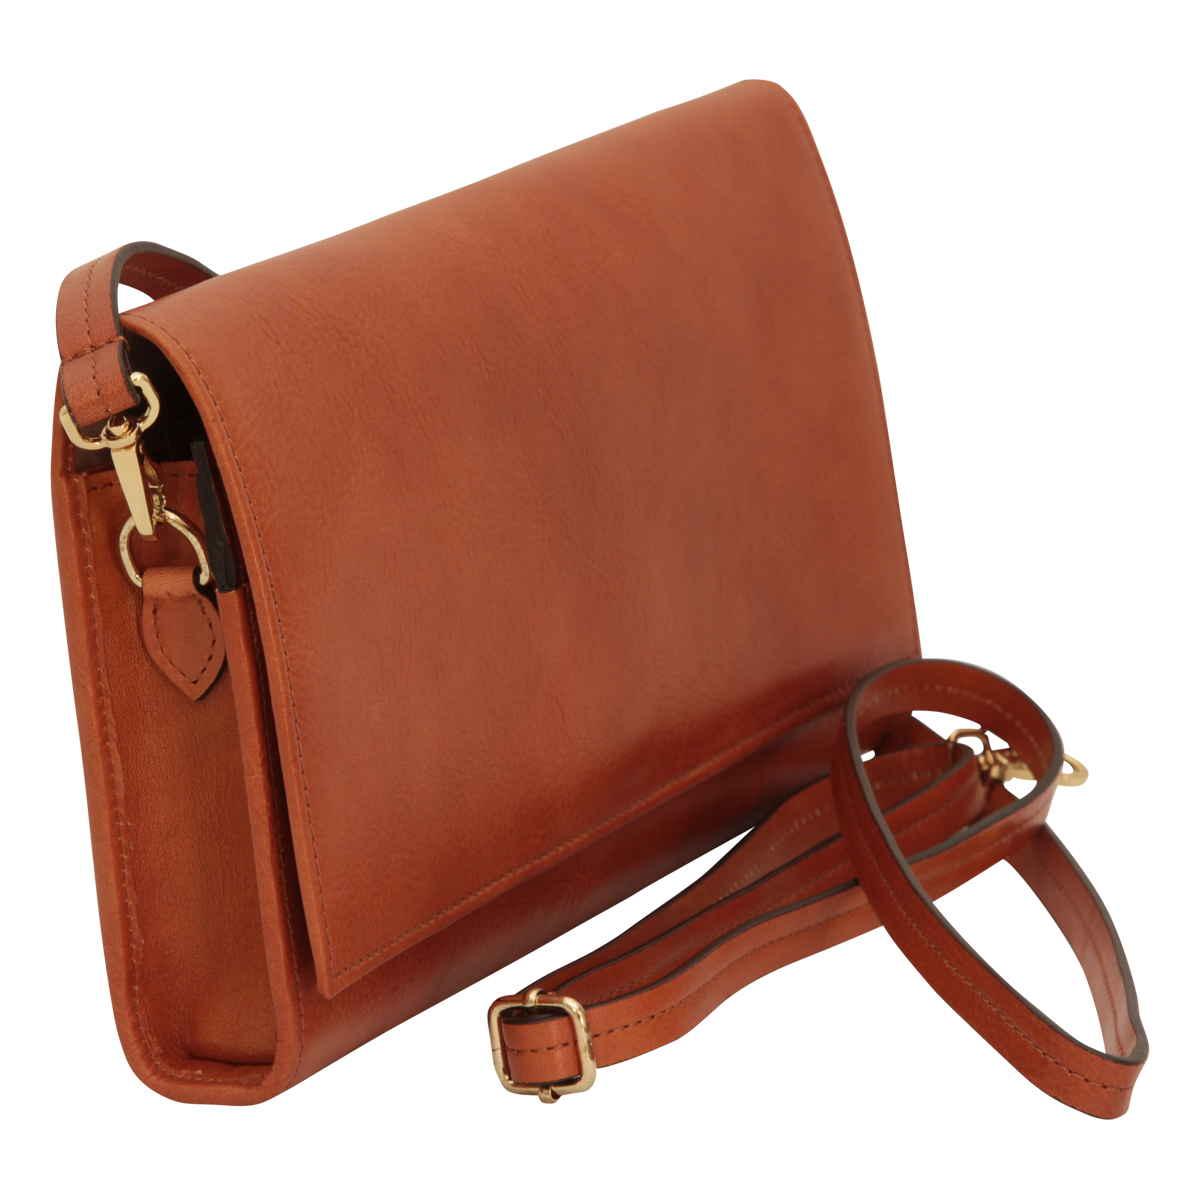 Full grain calfskin shoulder bag . Brown coloniale | 556889CO US | Old Angler Firenze